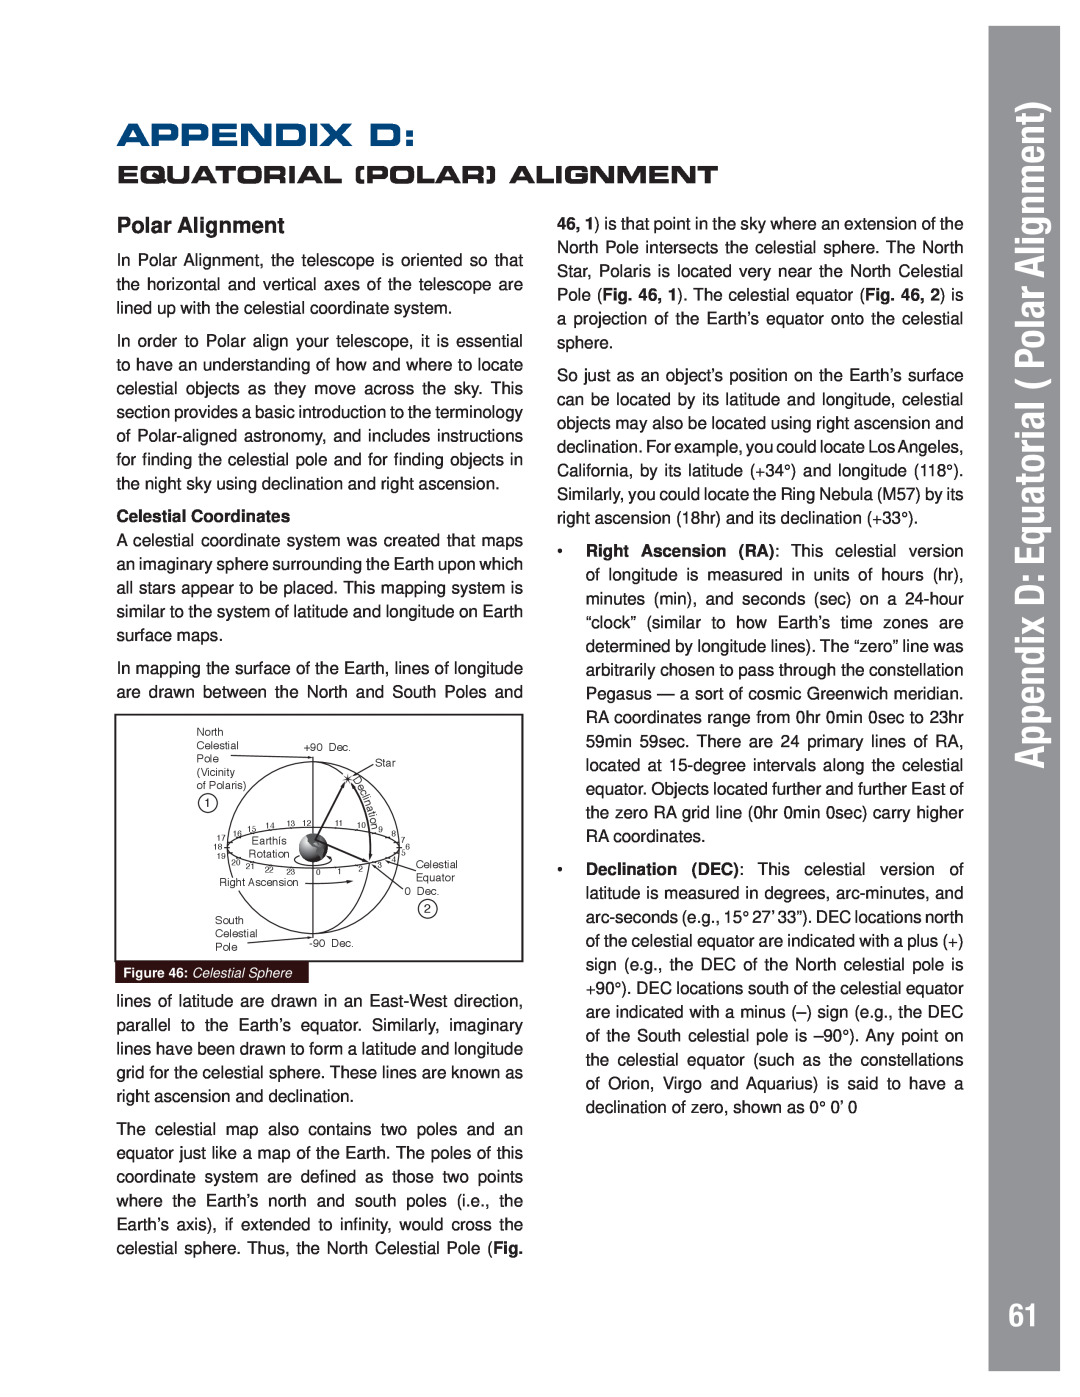 Meade LX80 instruction manual Appendix D Equatorial Polar, Equatorial Polar Alignment, Celestial Coordinates 